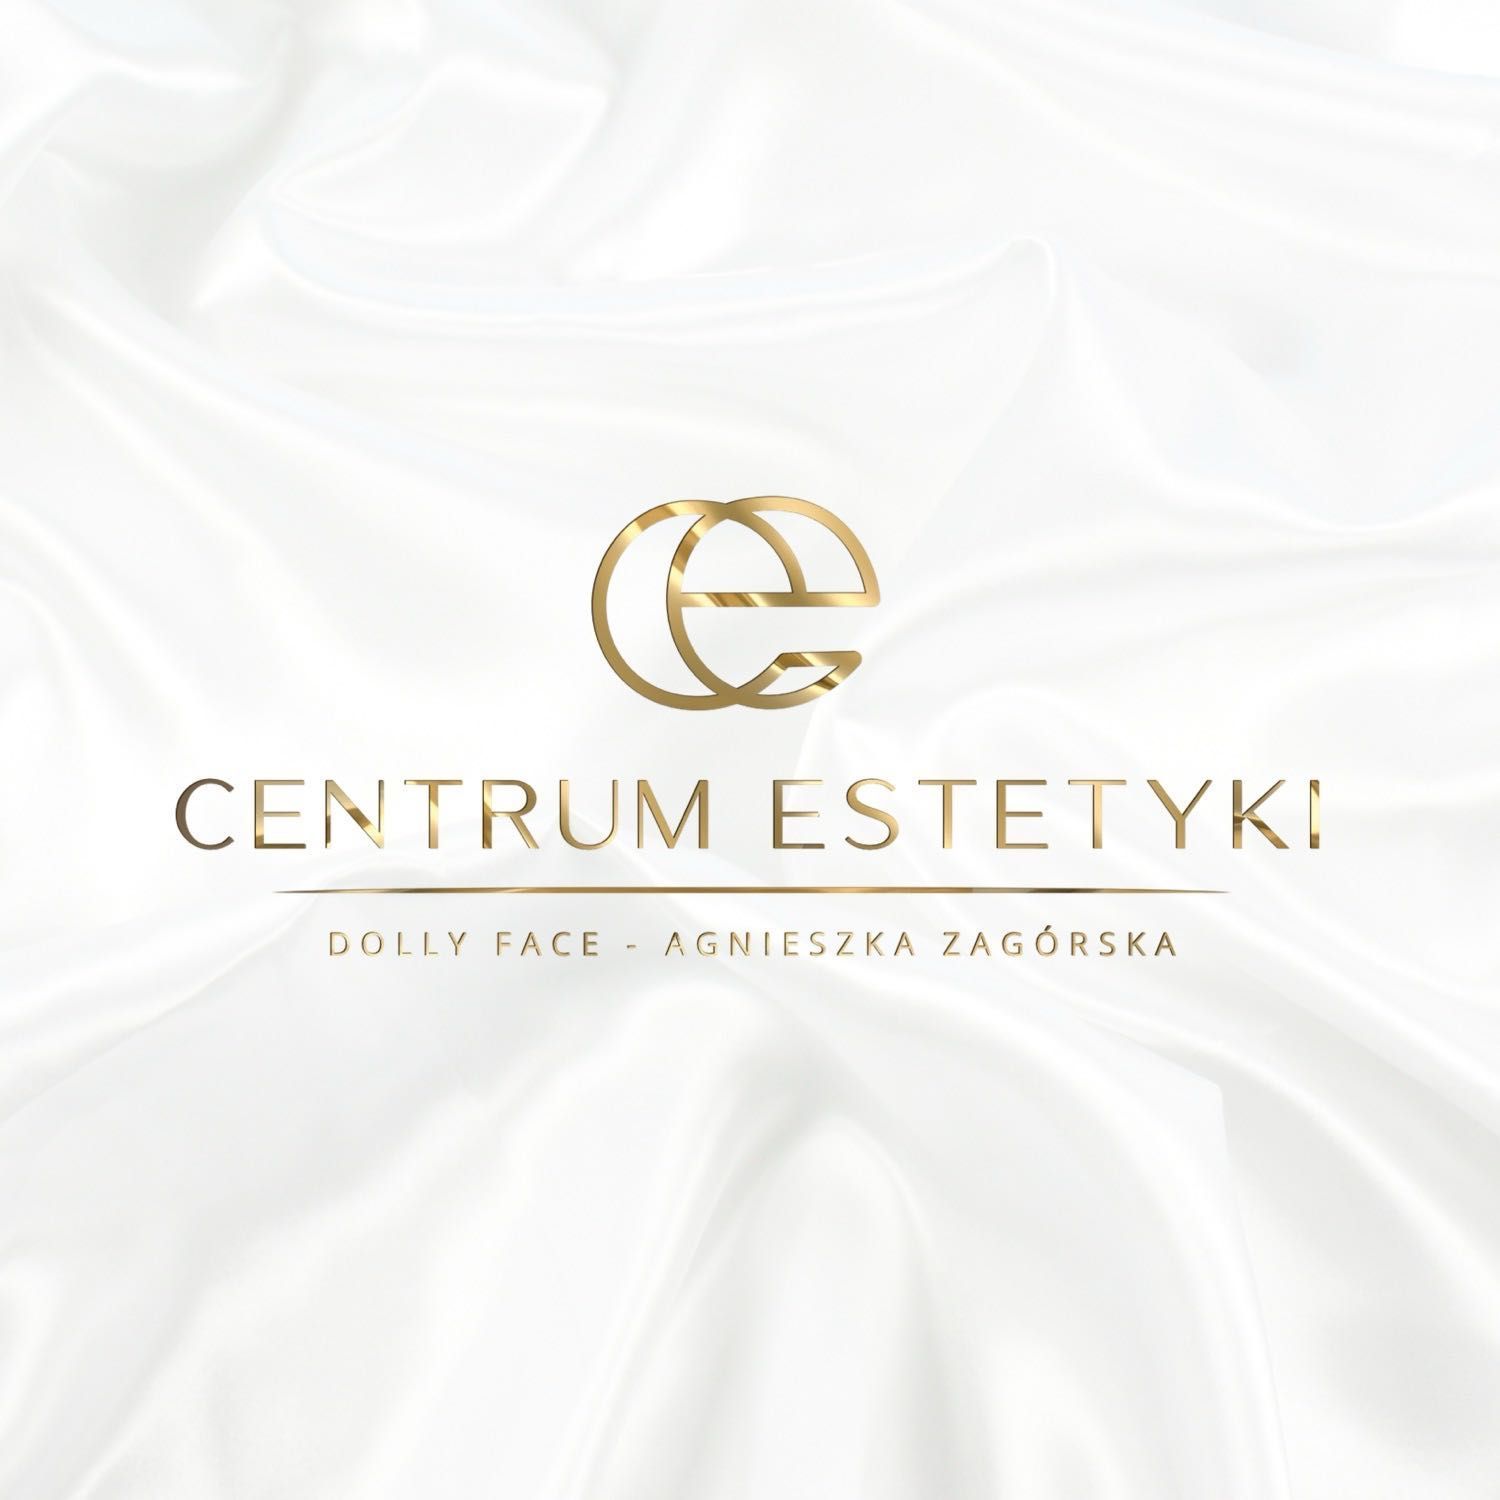 Centrum Estetyki Dolly Face, 1 Maja 9, 90, 45-068, Opole